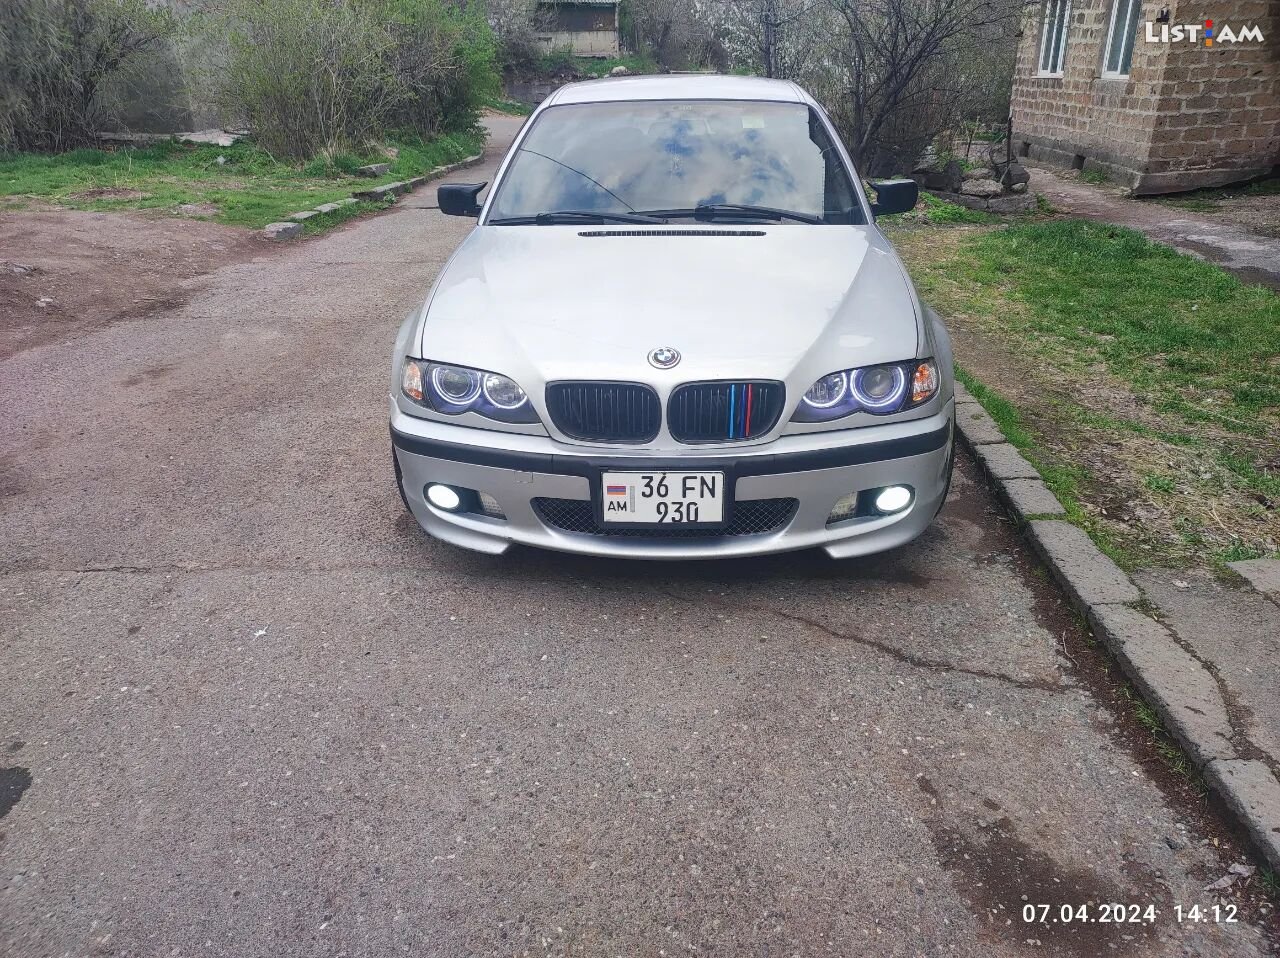 BMW 3 Series, 2.2